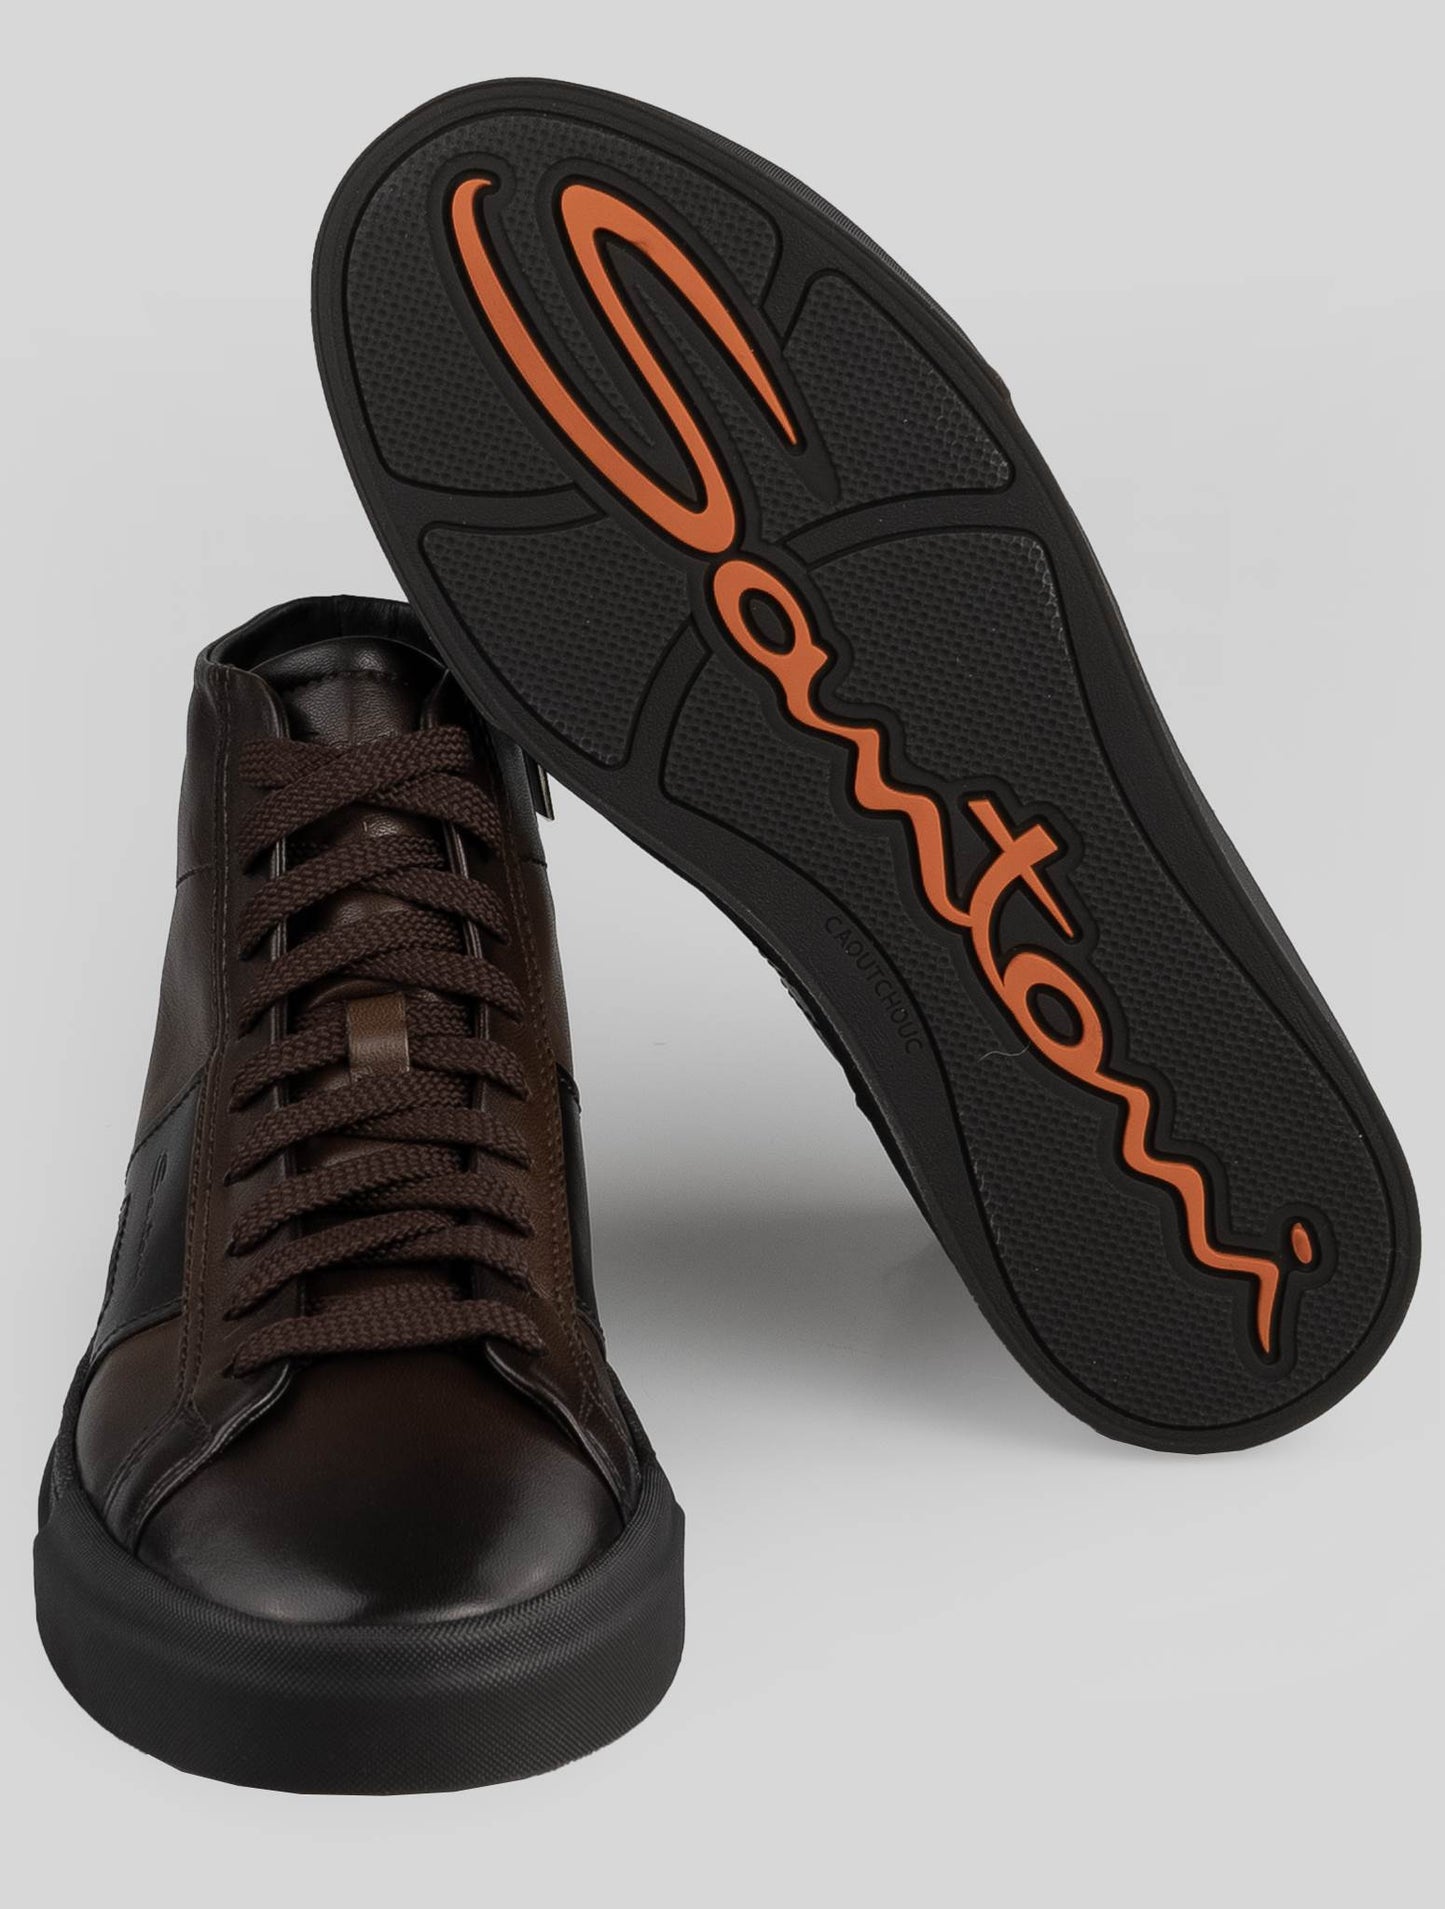 Santoni Brown Leather Sneakers